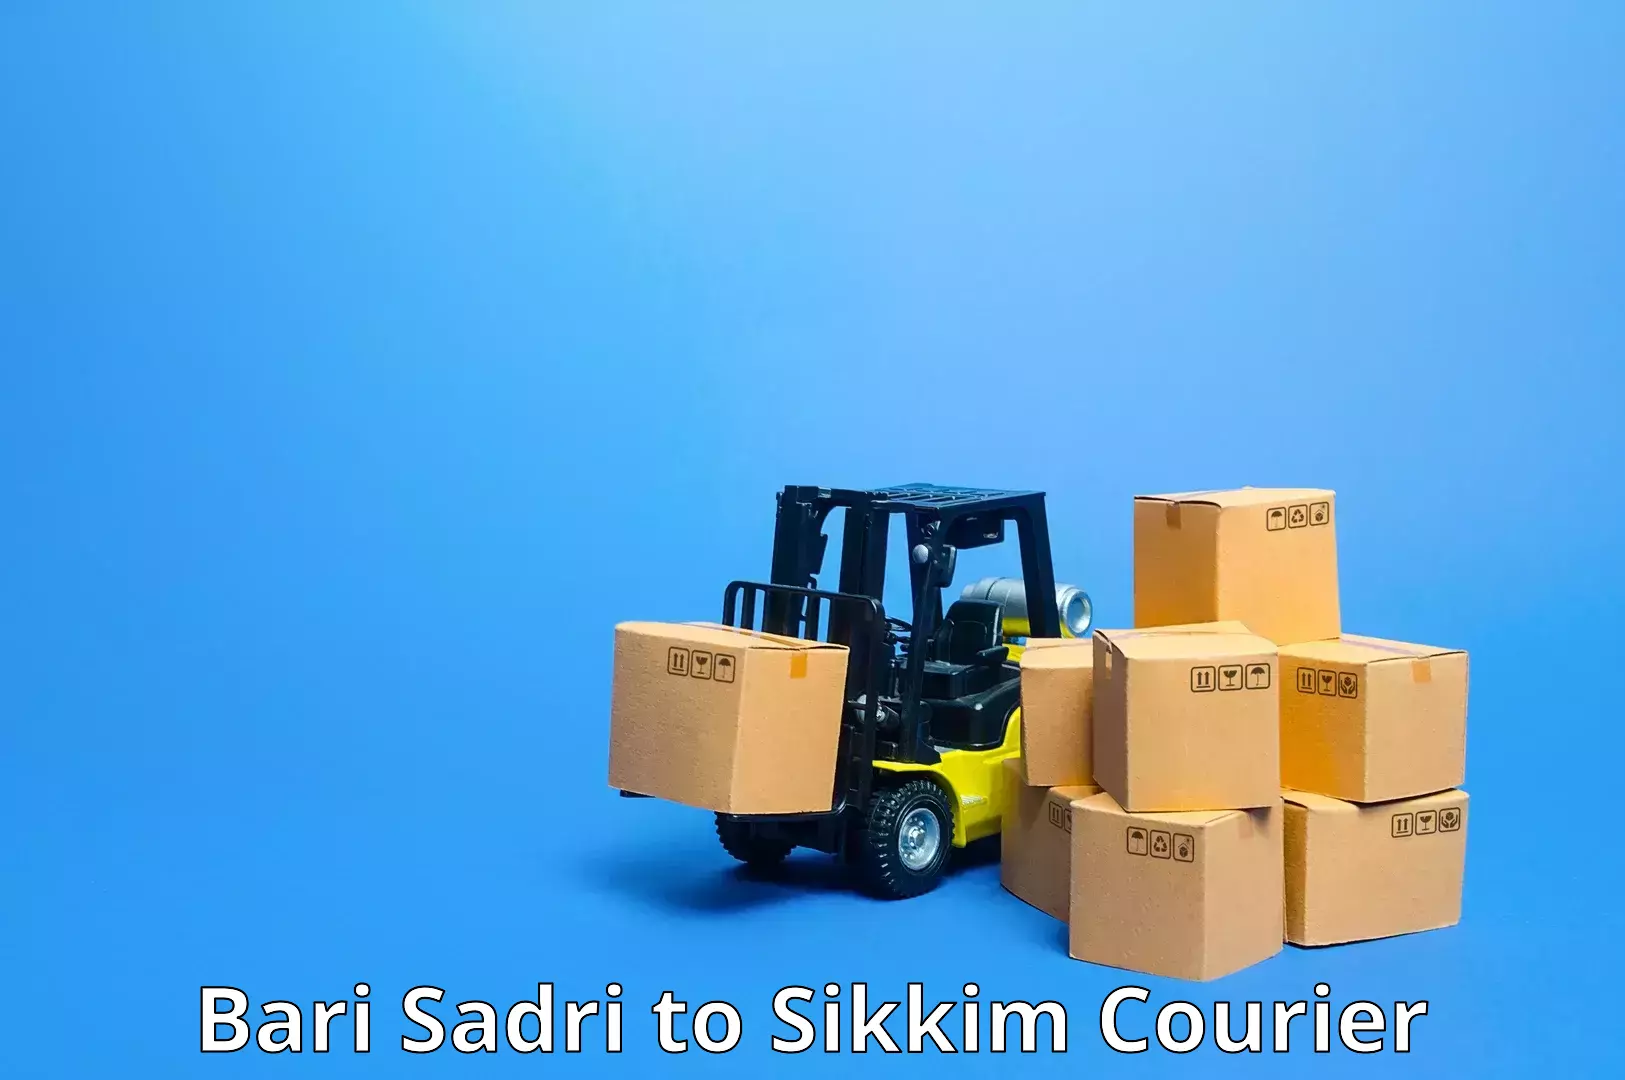 Reliable parcel services Bari Sadri to Pelling